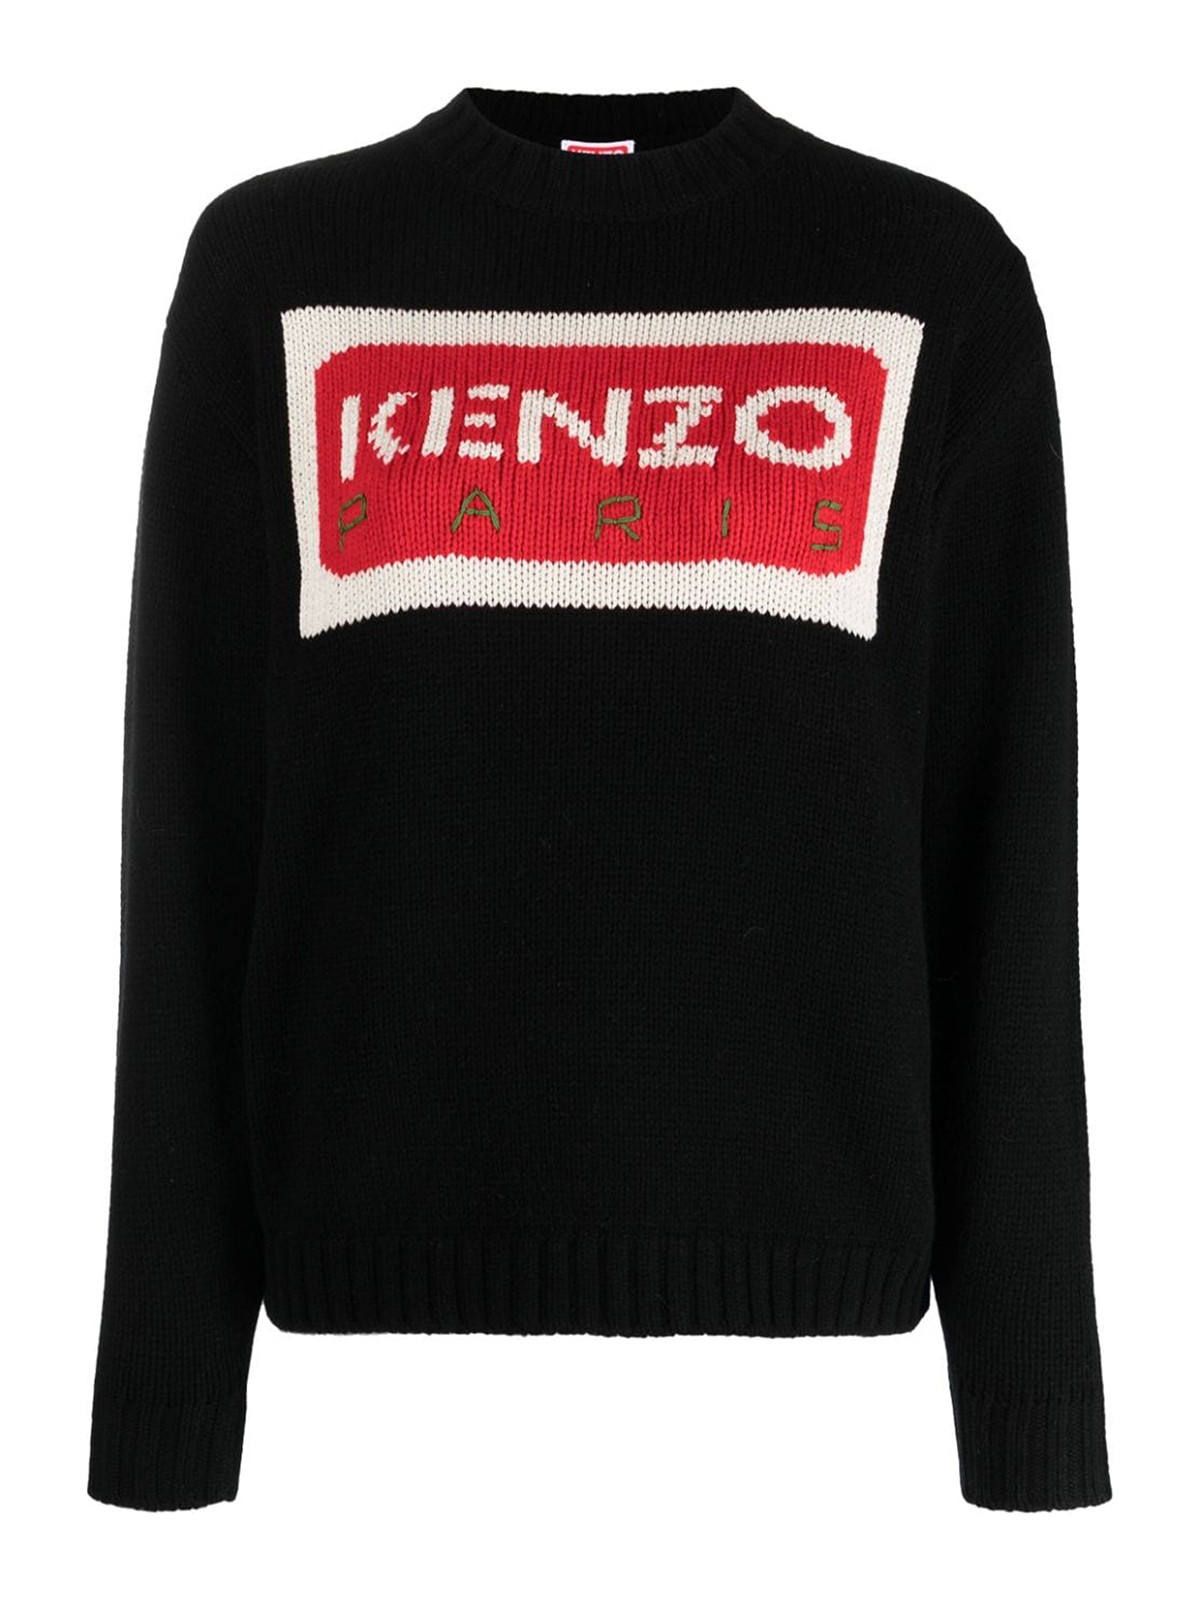 Kenzo Paris Logo Jumper In Black